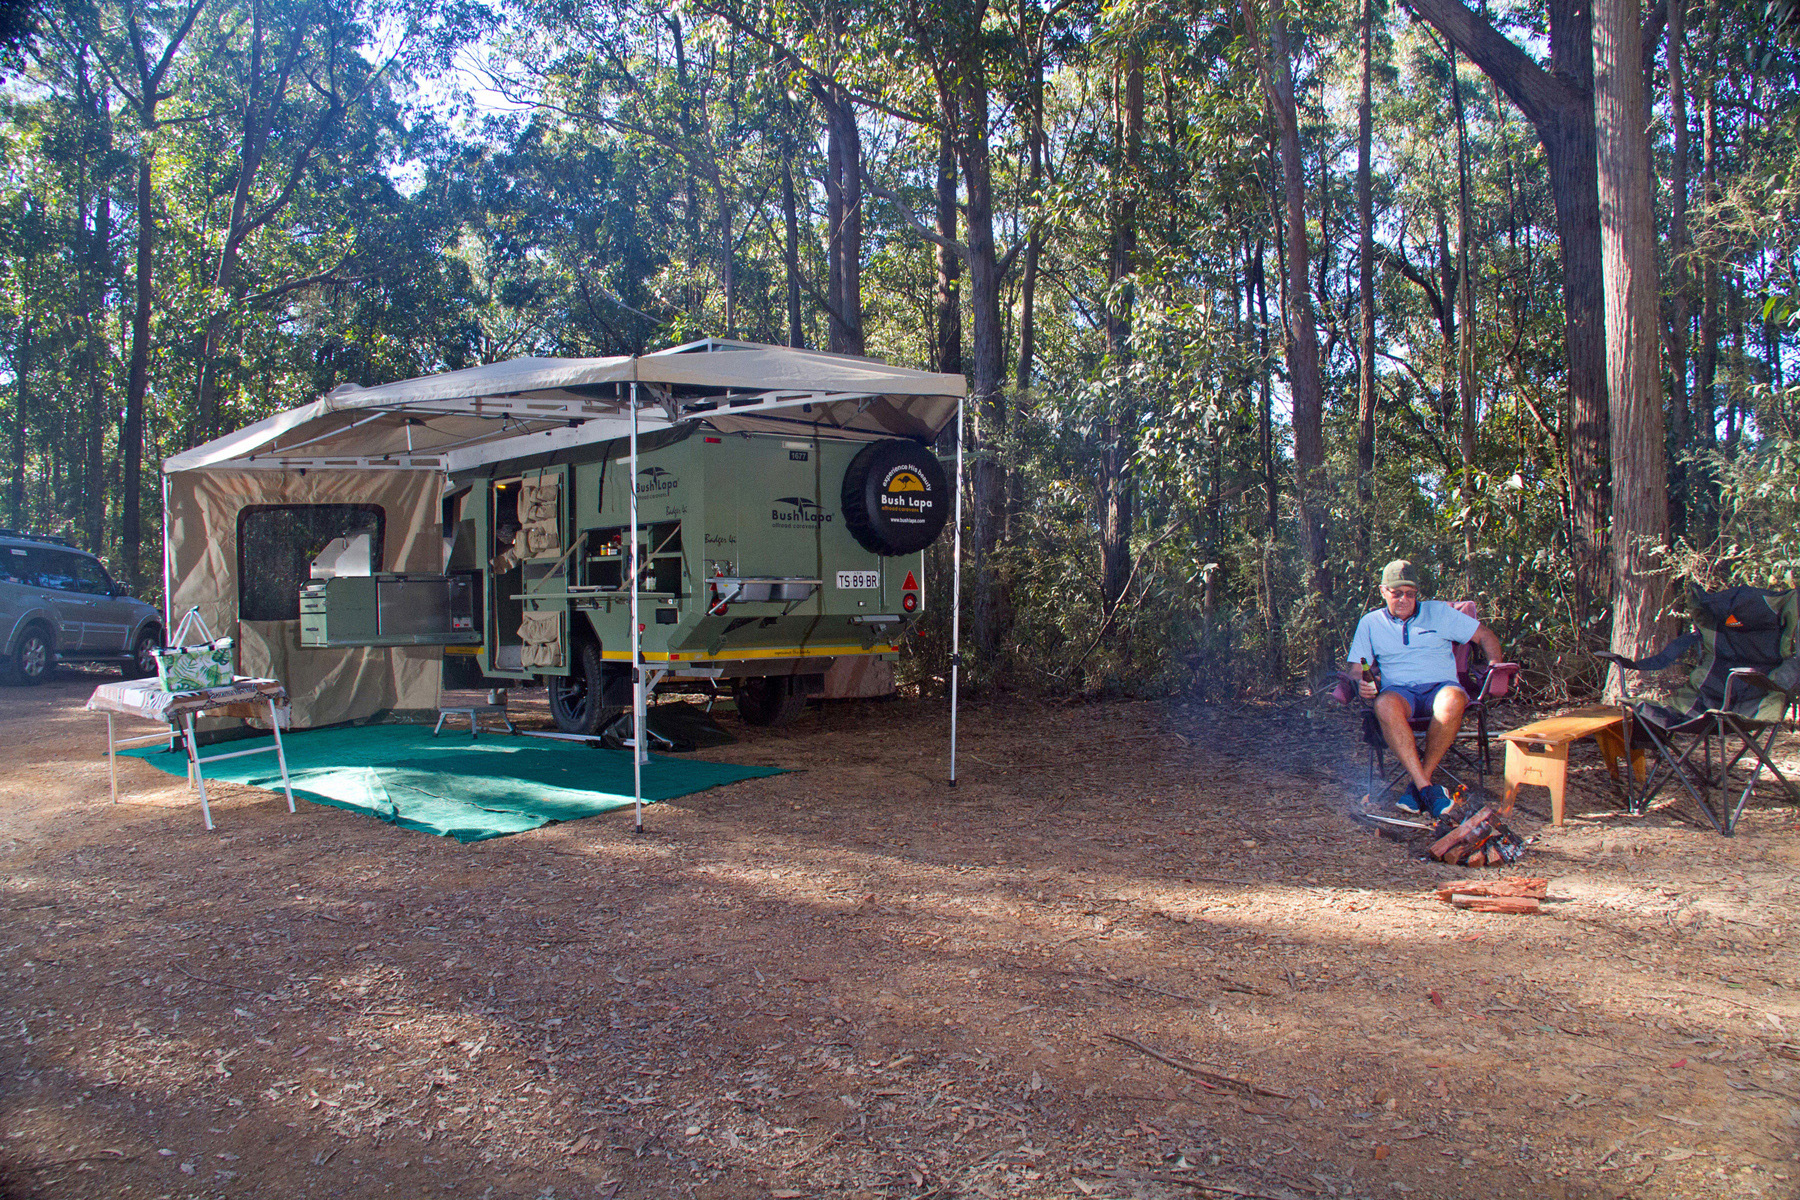 Camper with set up Bush Lapa